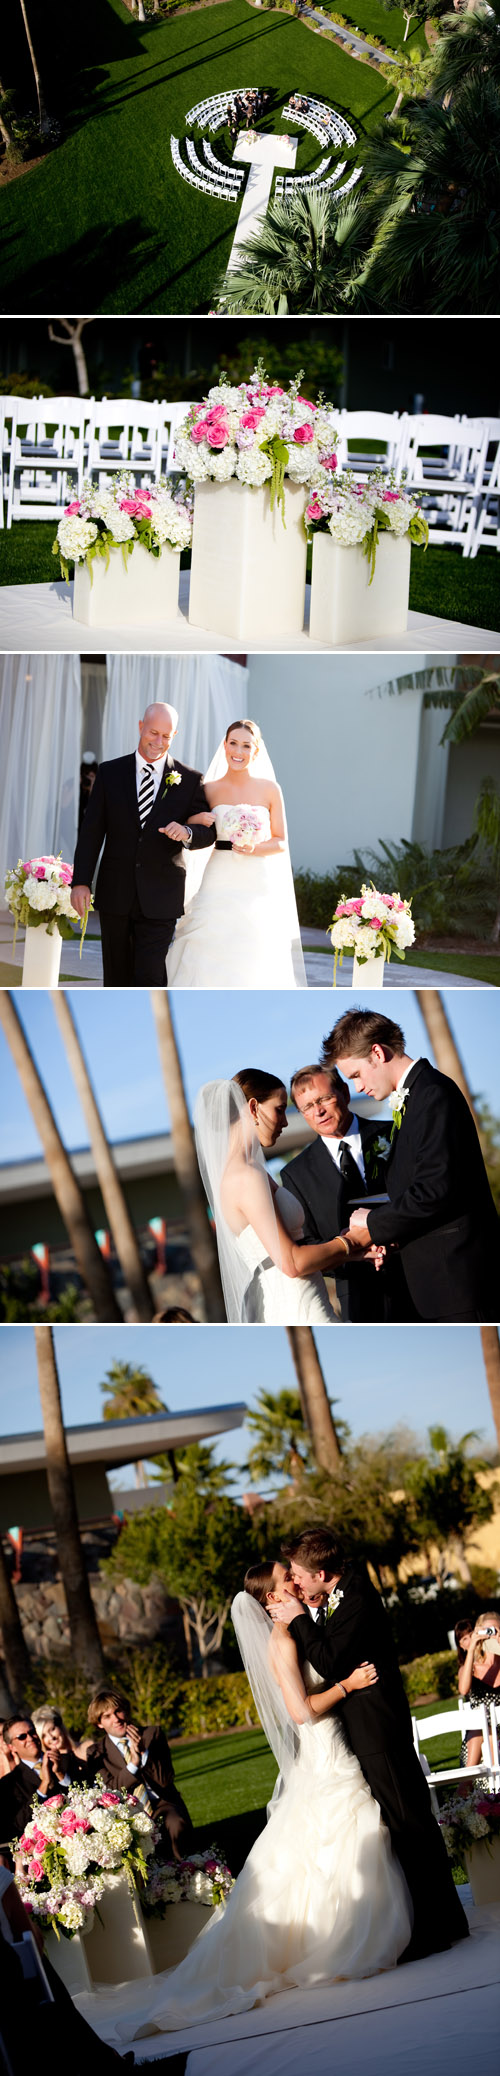 Scottsdale, Arizona Hotel Valley Ho real wedding photos by Kimberly Jarman